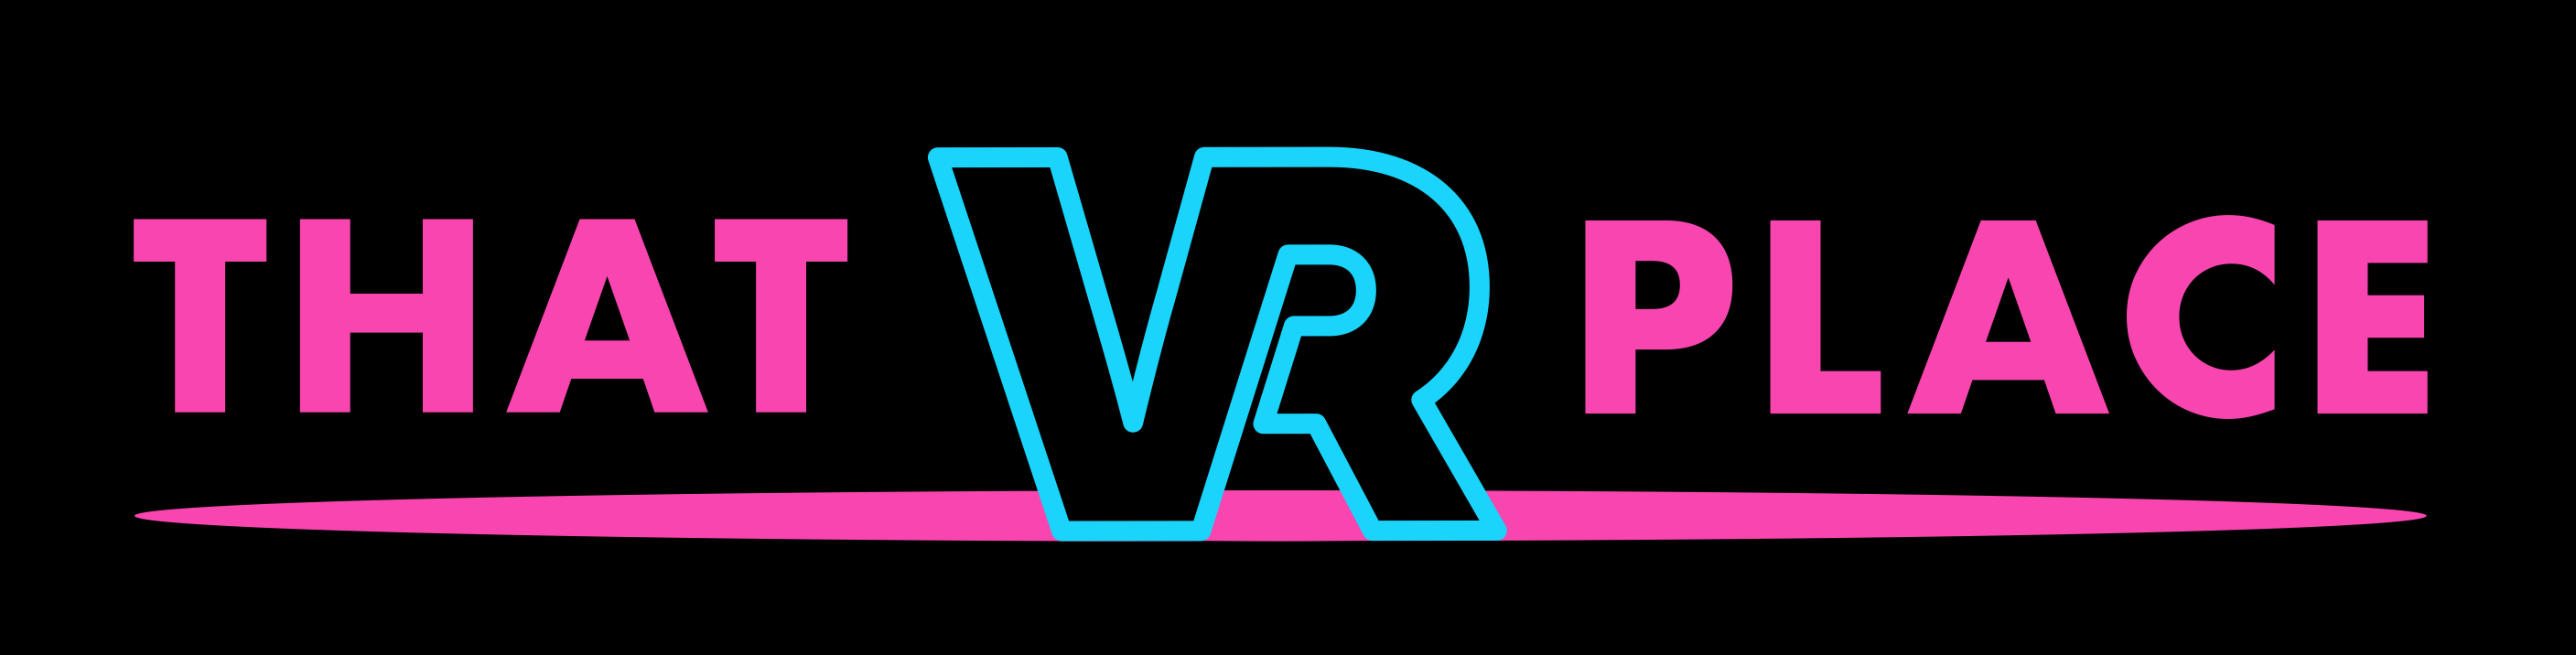 That VR Place logo